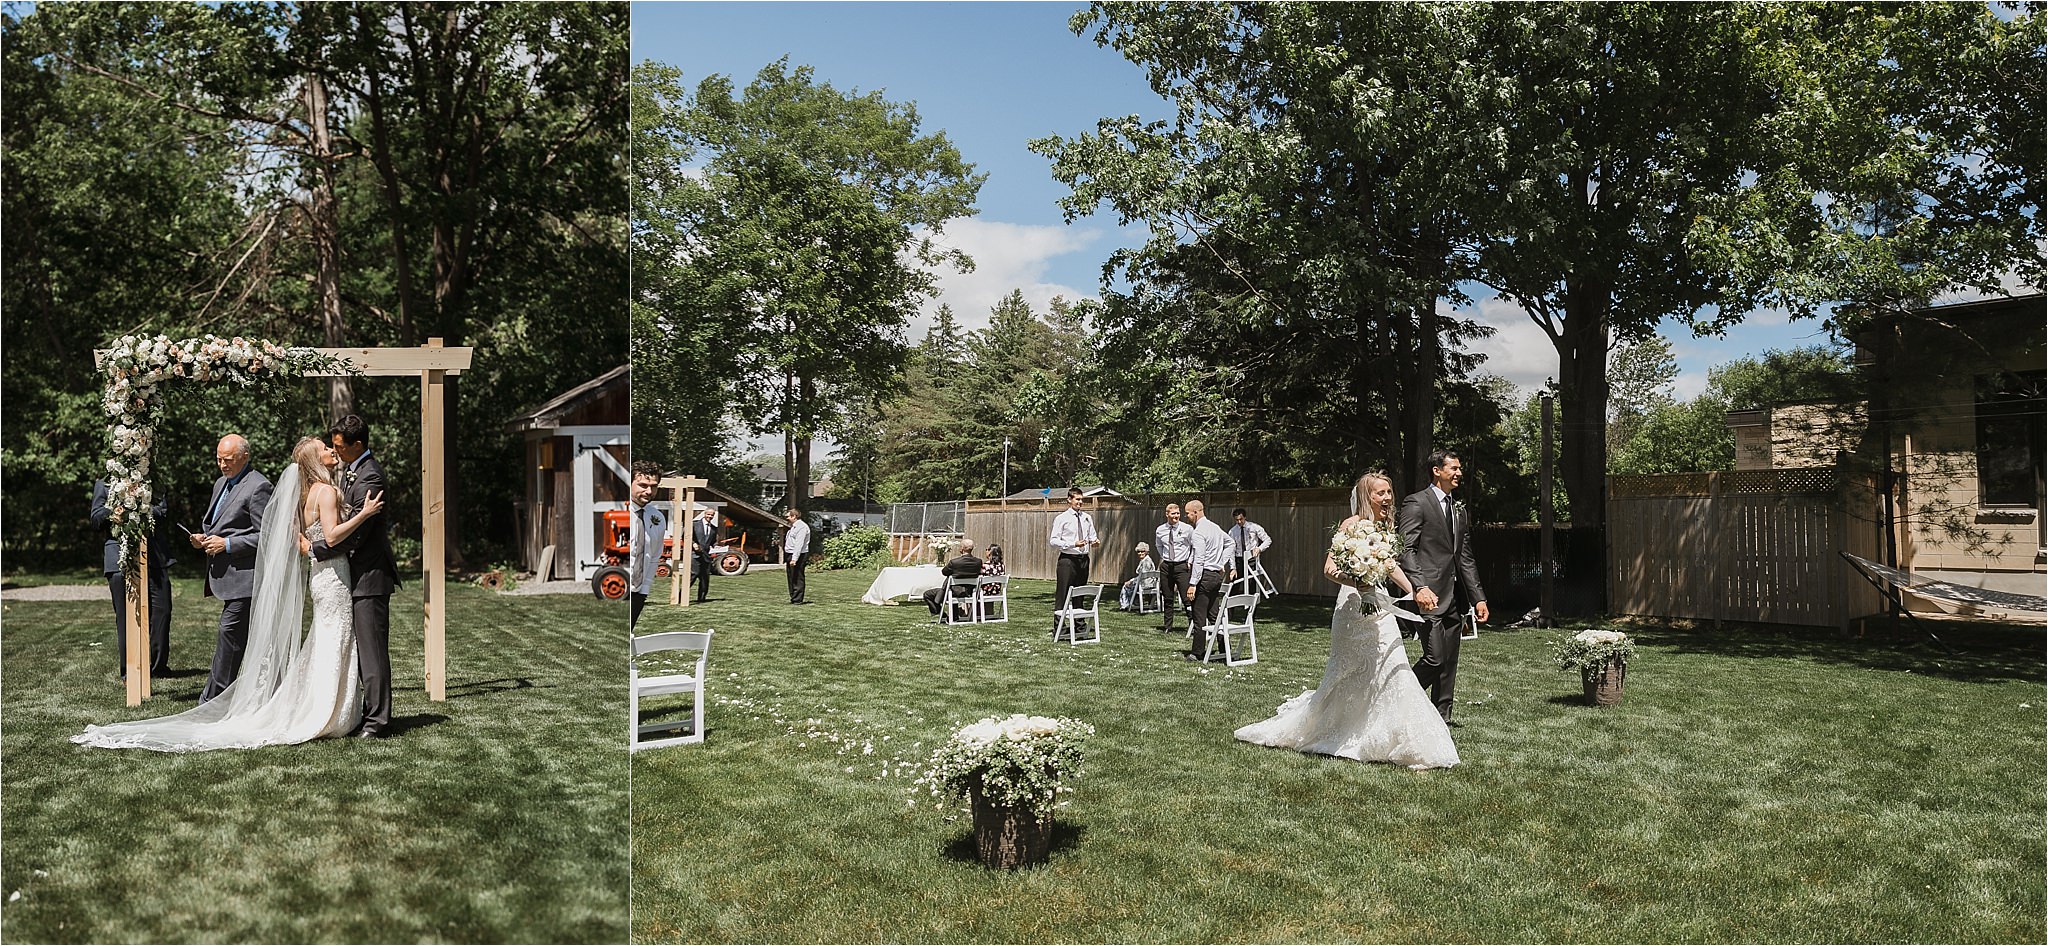 Ottawa Ontario backyard covid wedding ceremony. Socially distanced. Wedding arbor covered in greenery and flowers. Roses, peonies, Italian ruscus, sweet peas. 